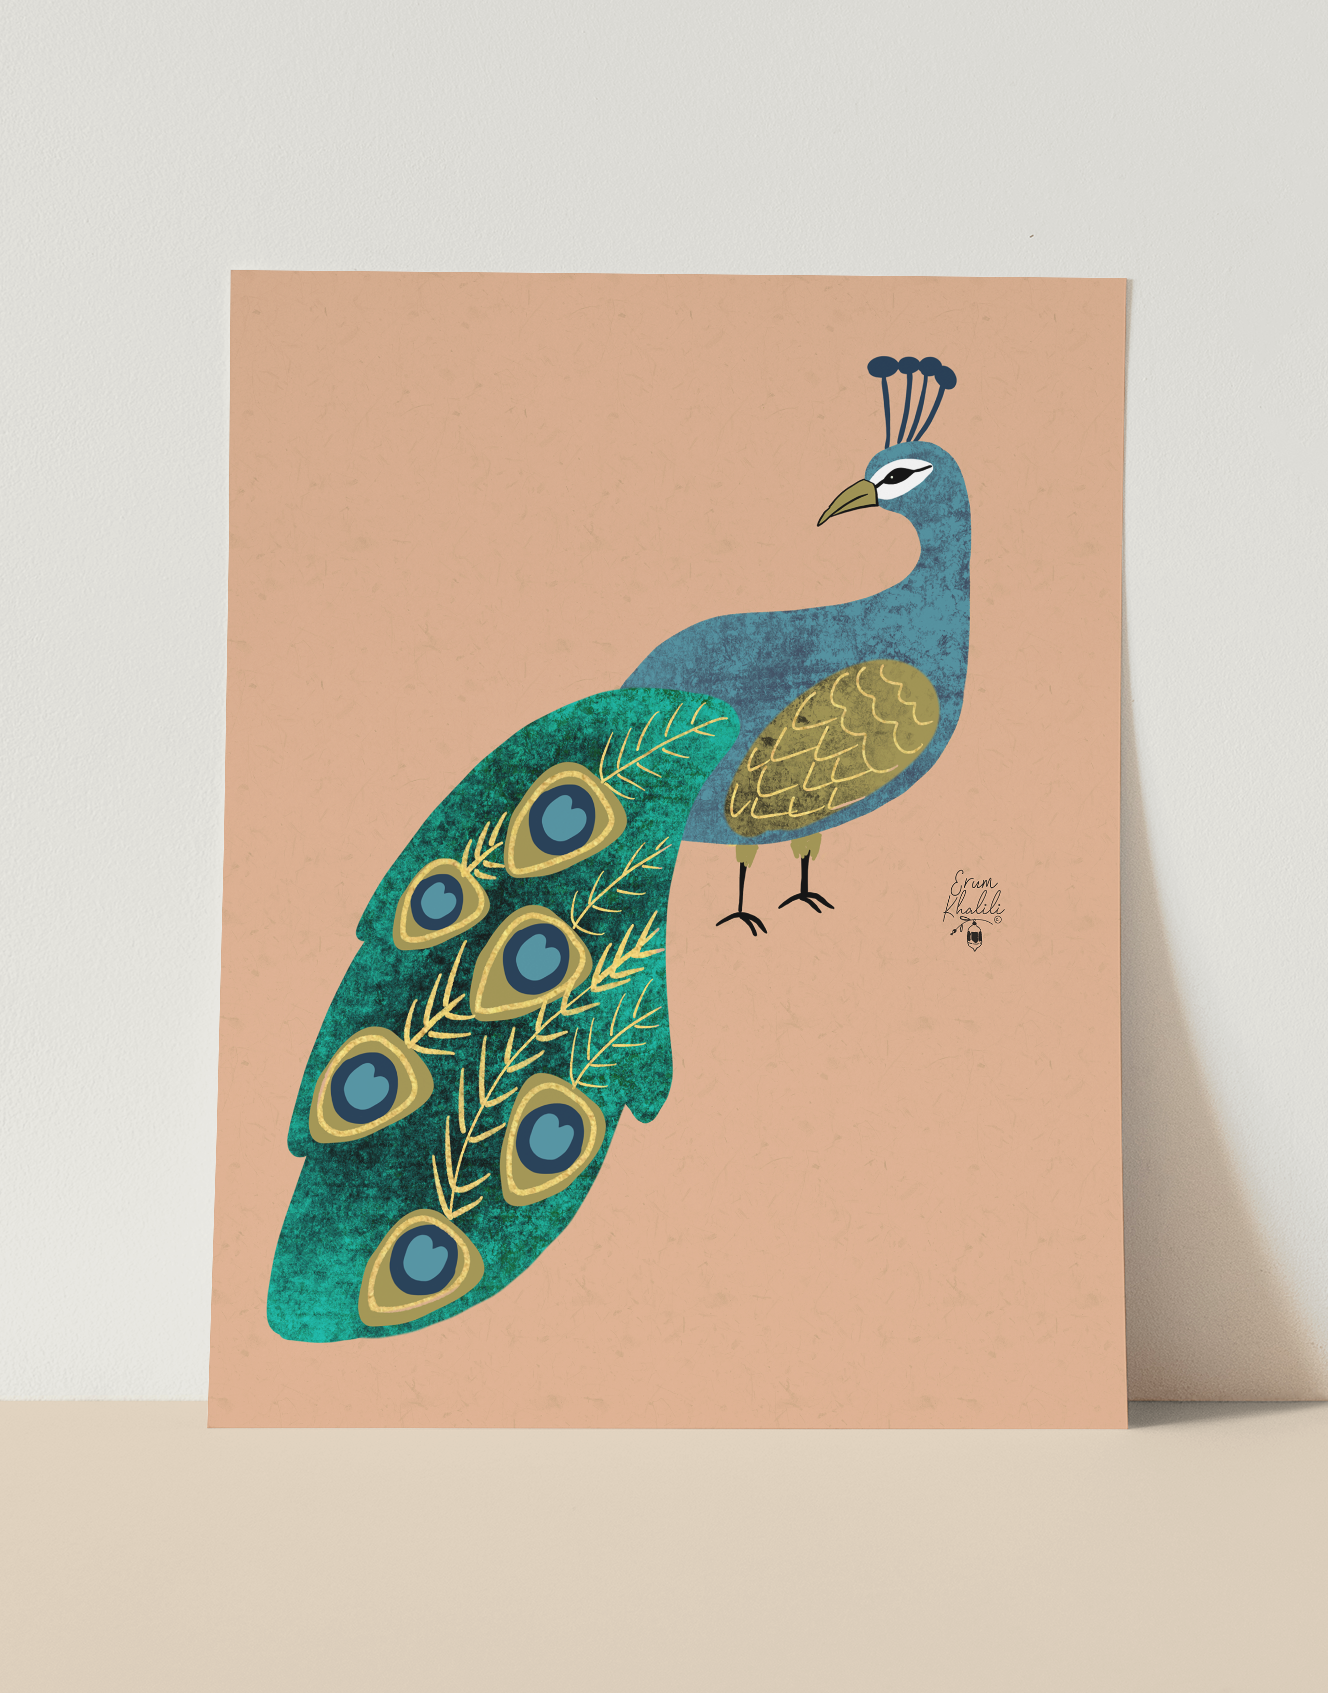 peacock drawings